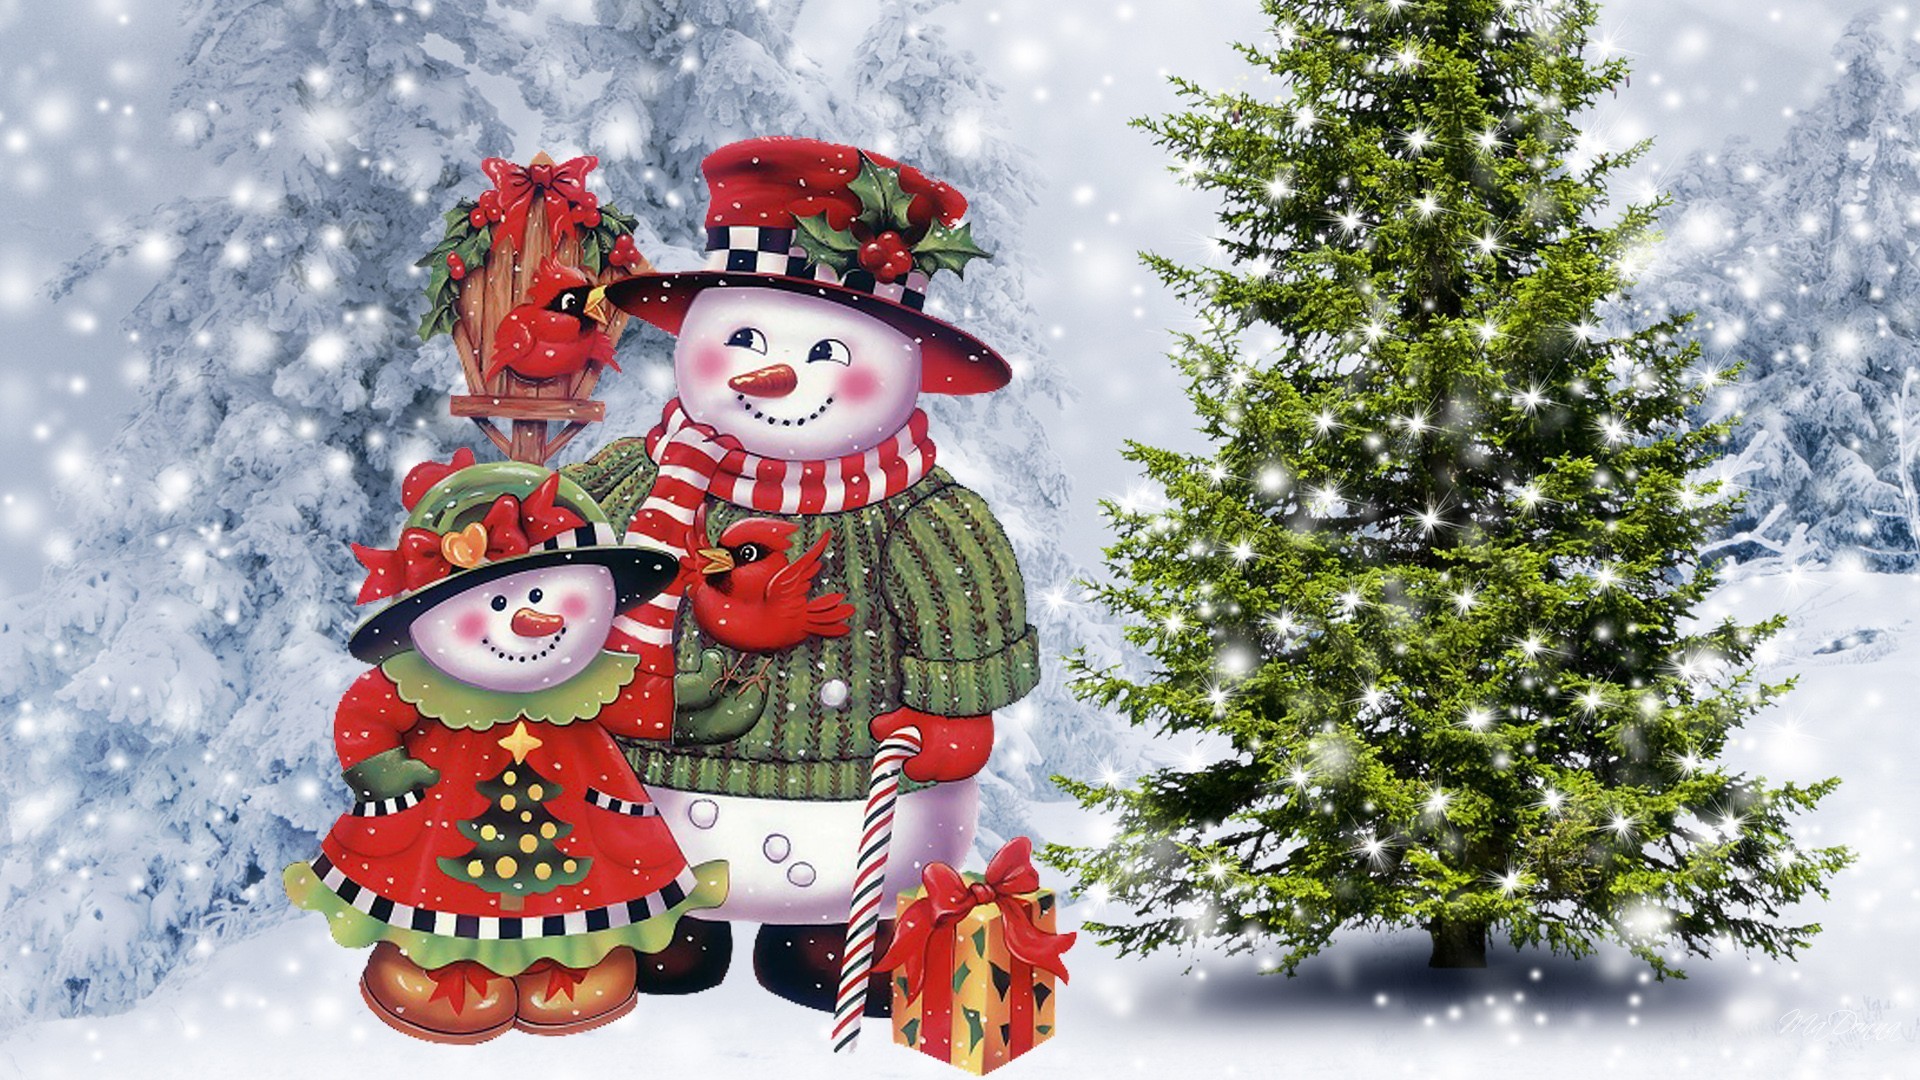 Christmas Snowman HD Wallpaper Free - New HD Wallpapers